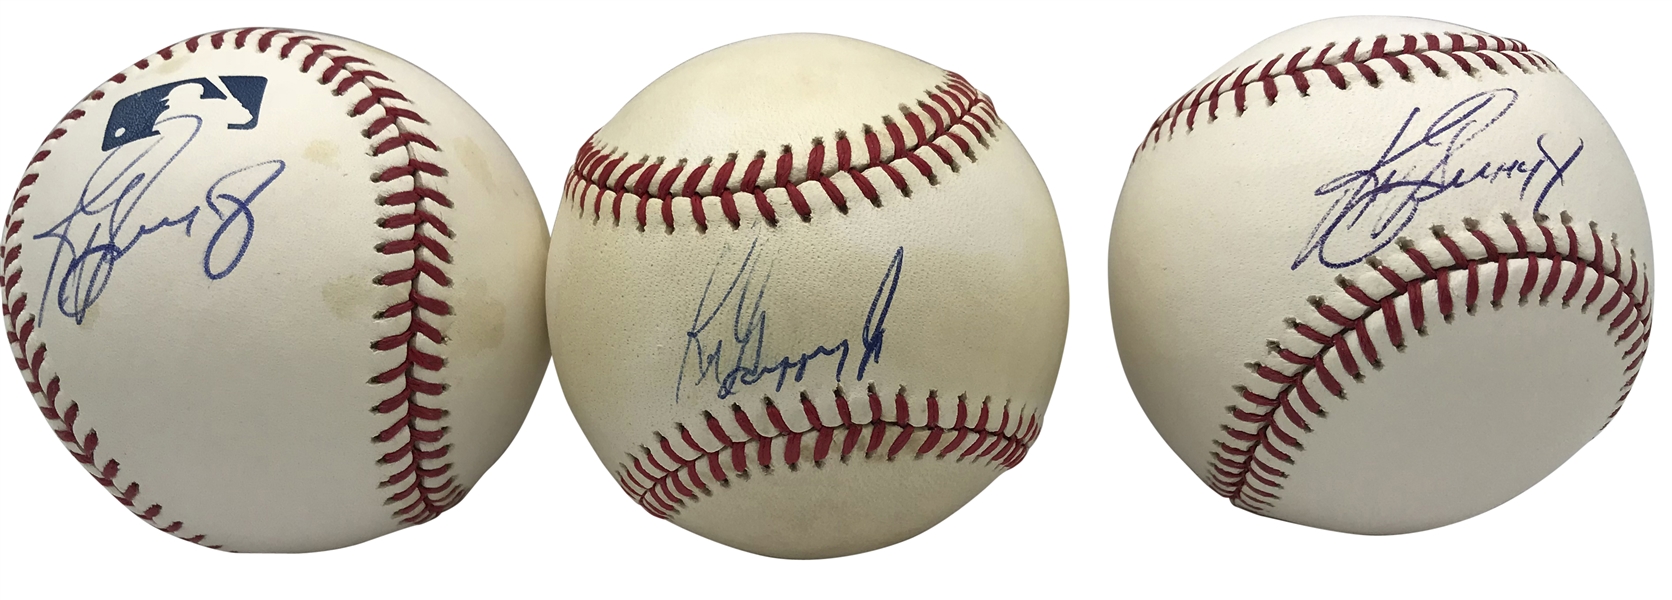 Ken Griffey Jr. Lot of Three (3) Signed Official Baseballs (Beckett/BAS Guaranteed)